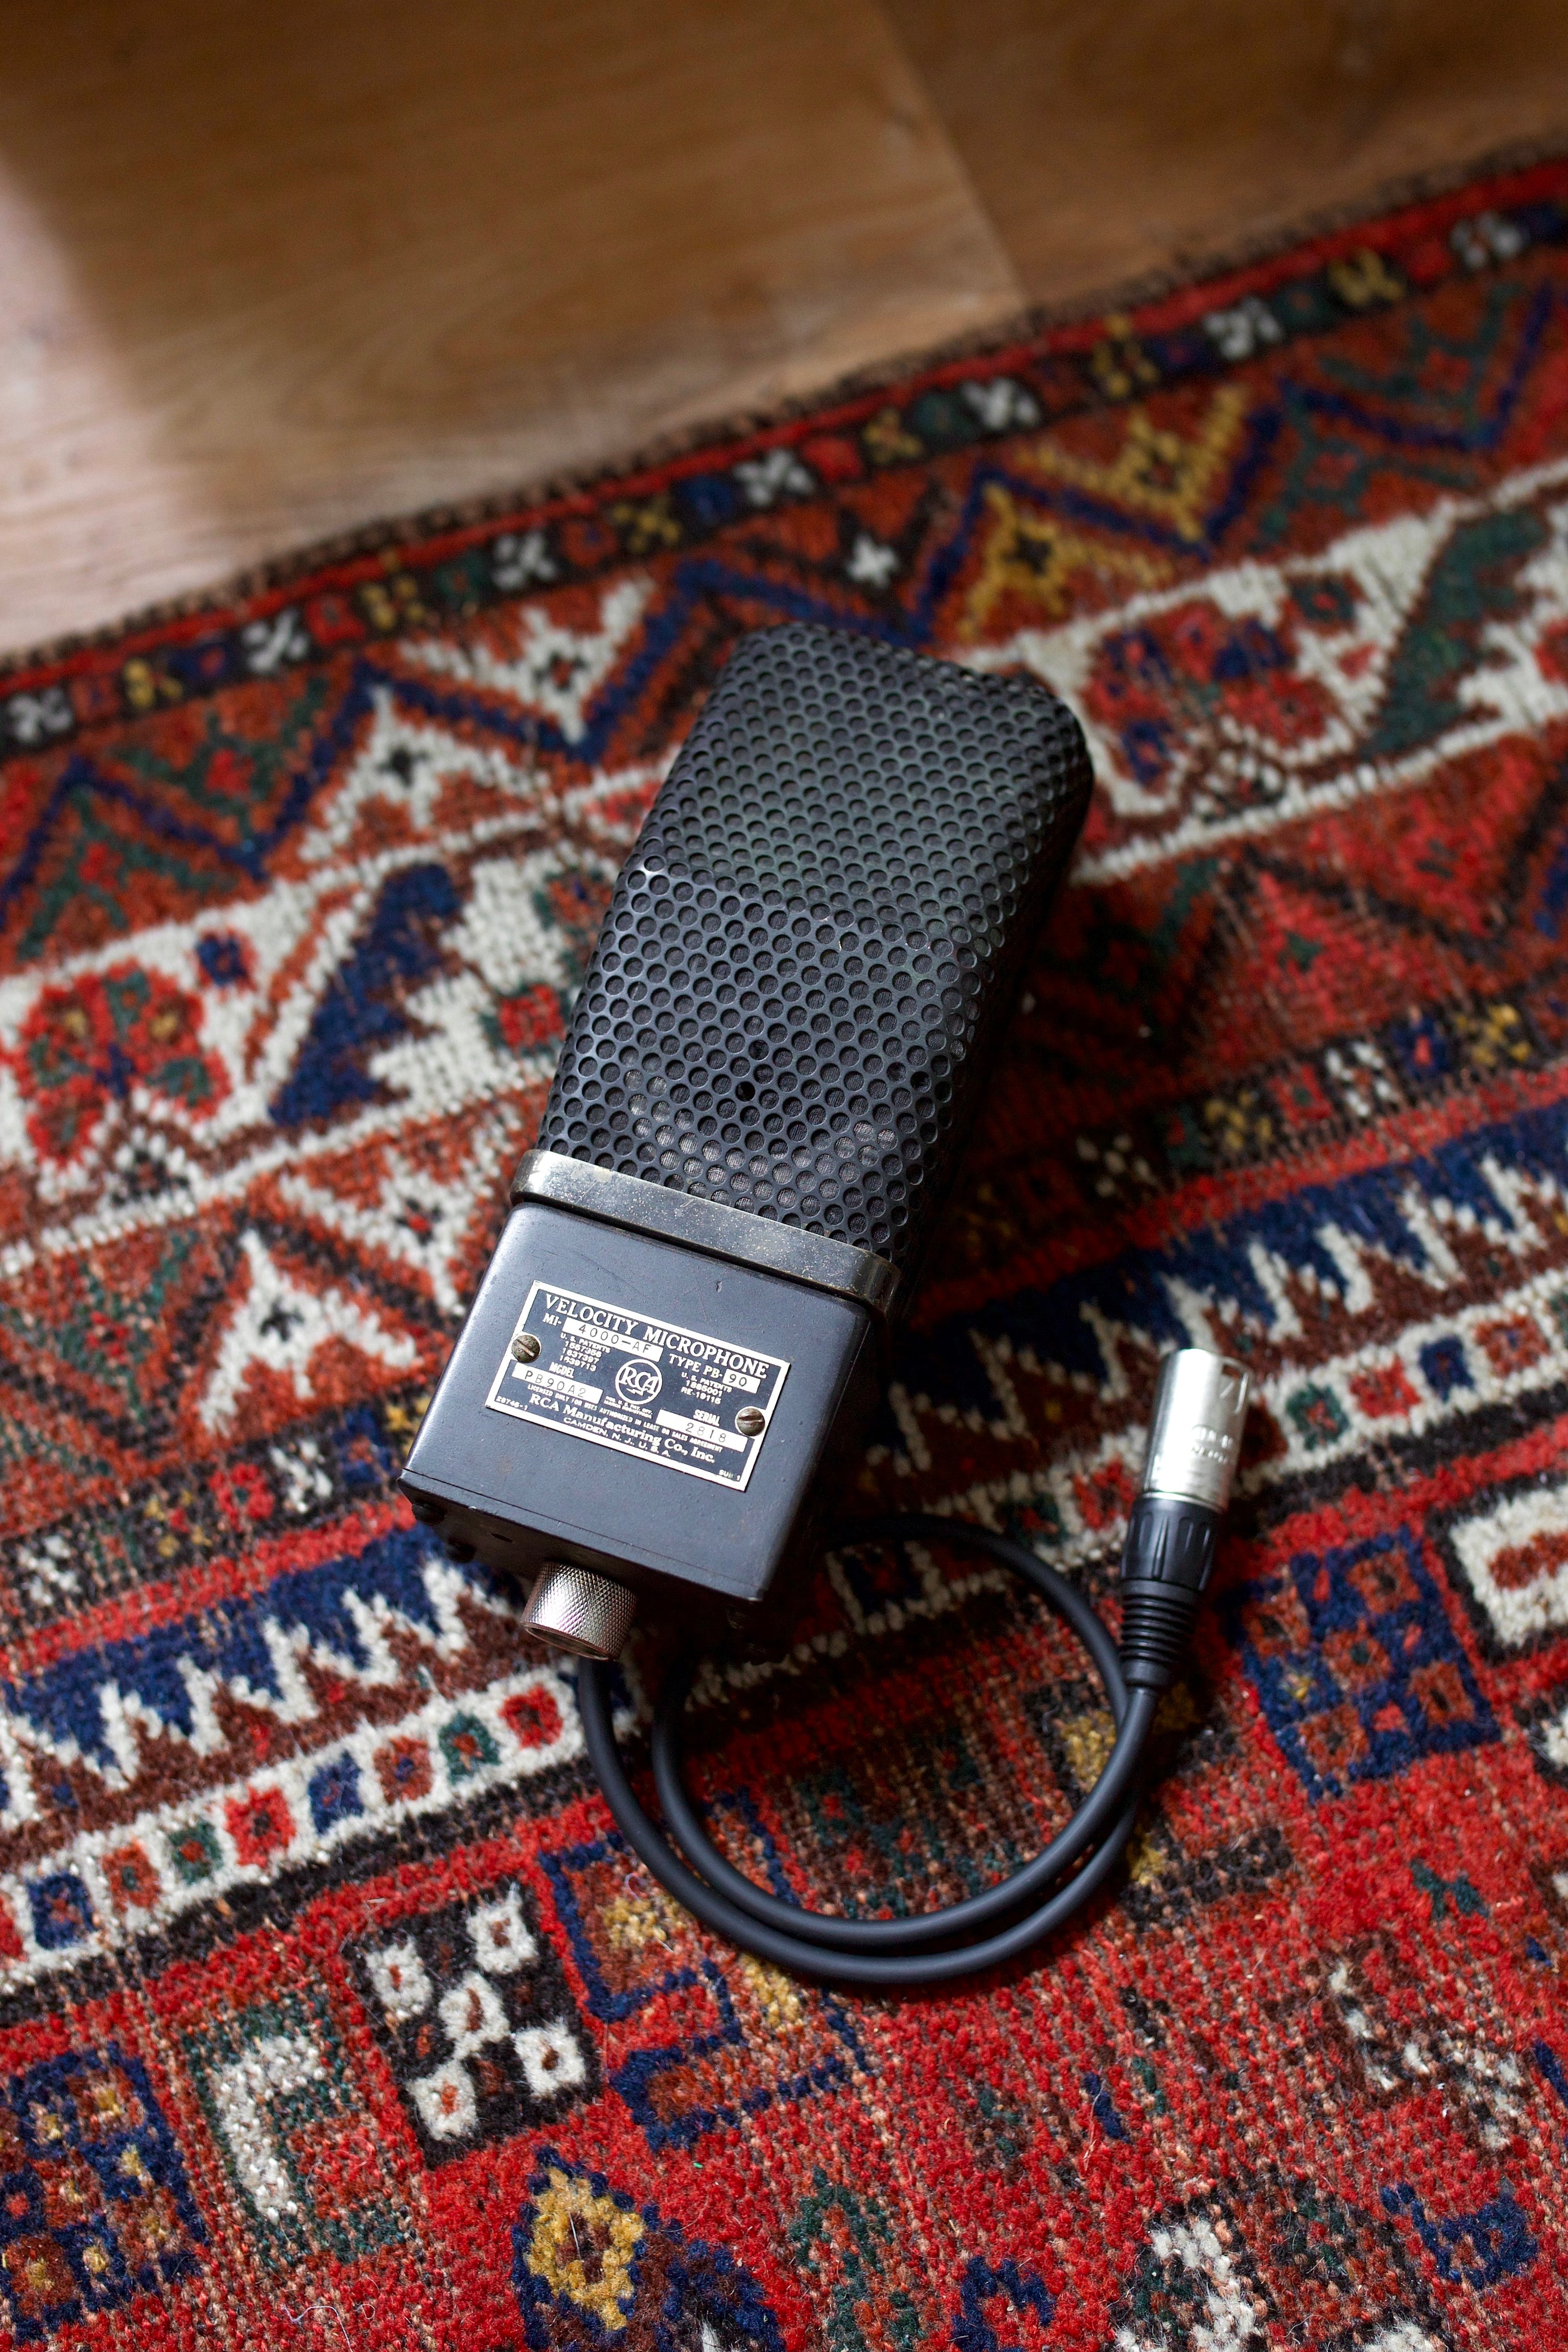 RCA PB-90 Ribbon Microphone